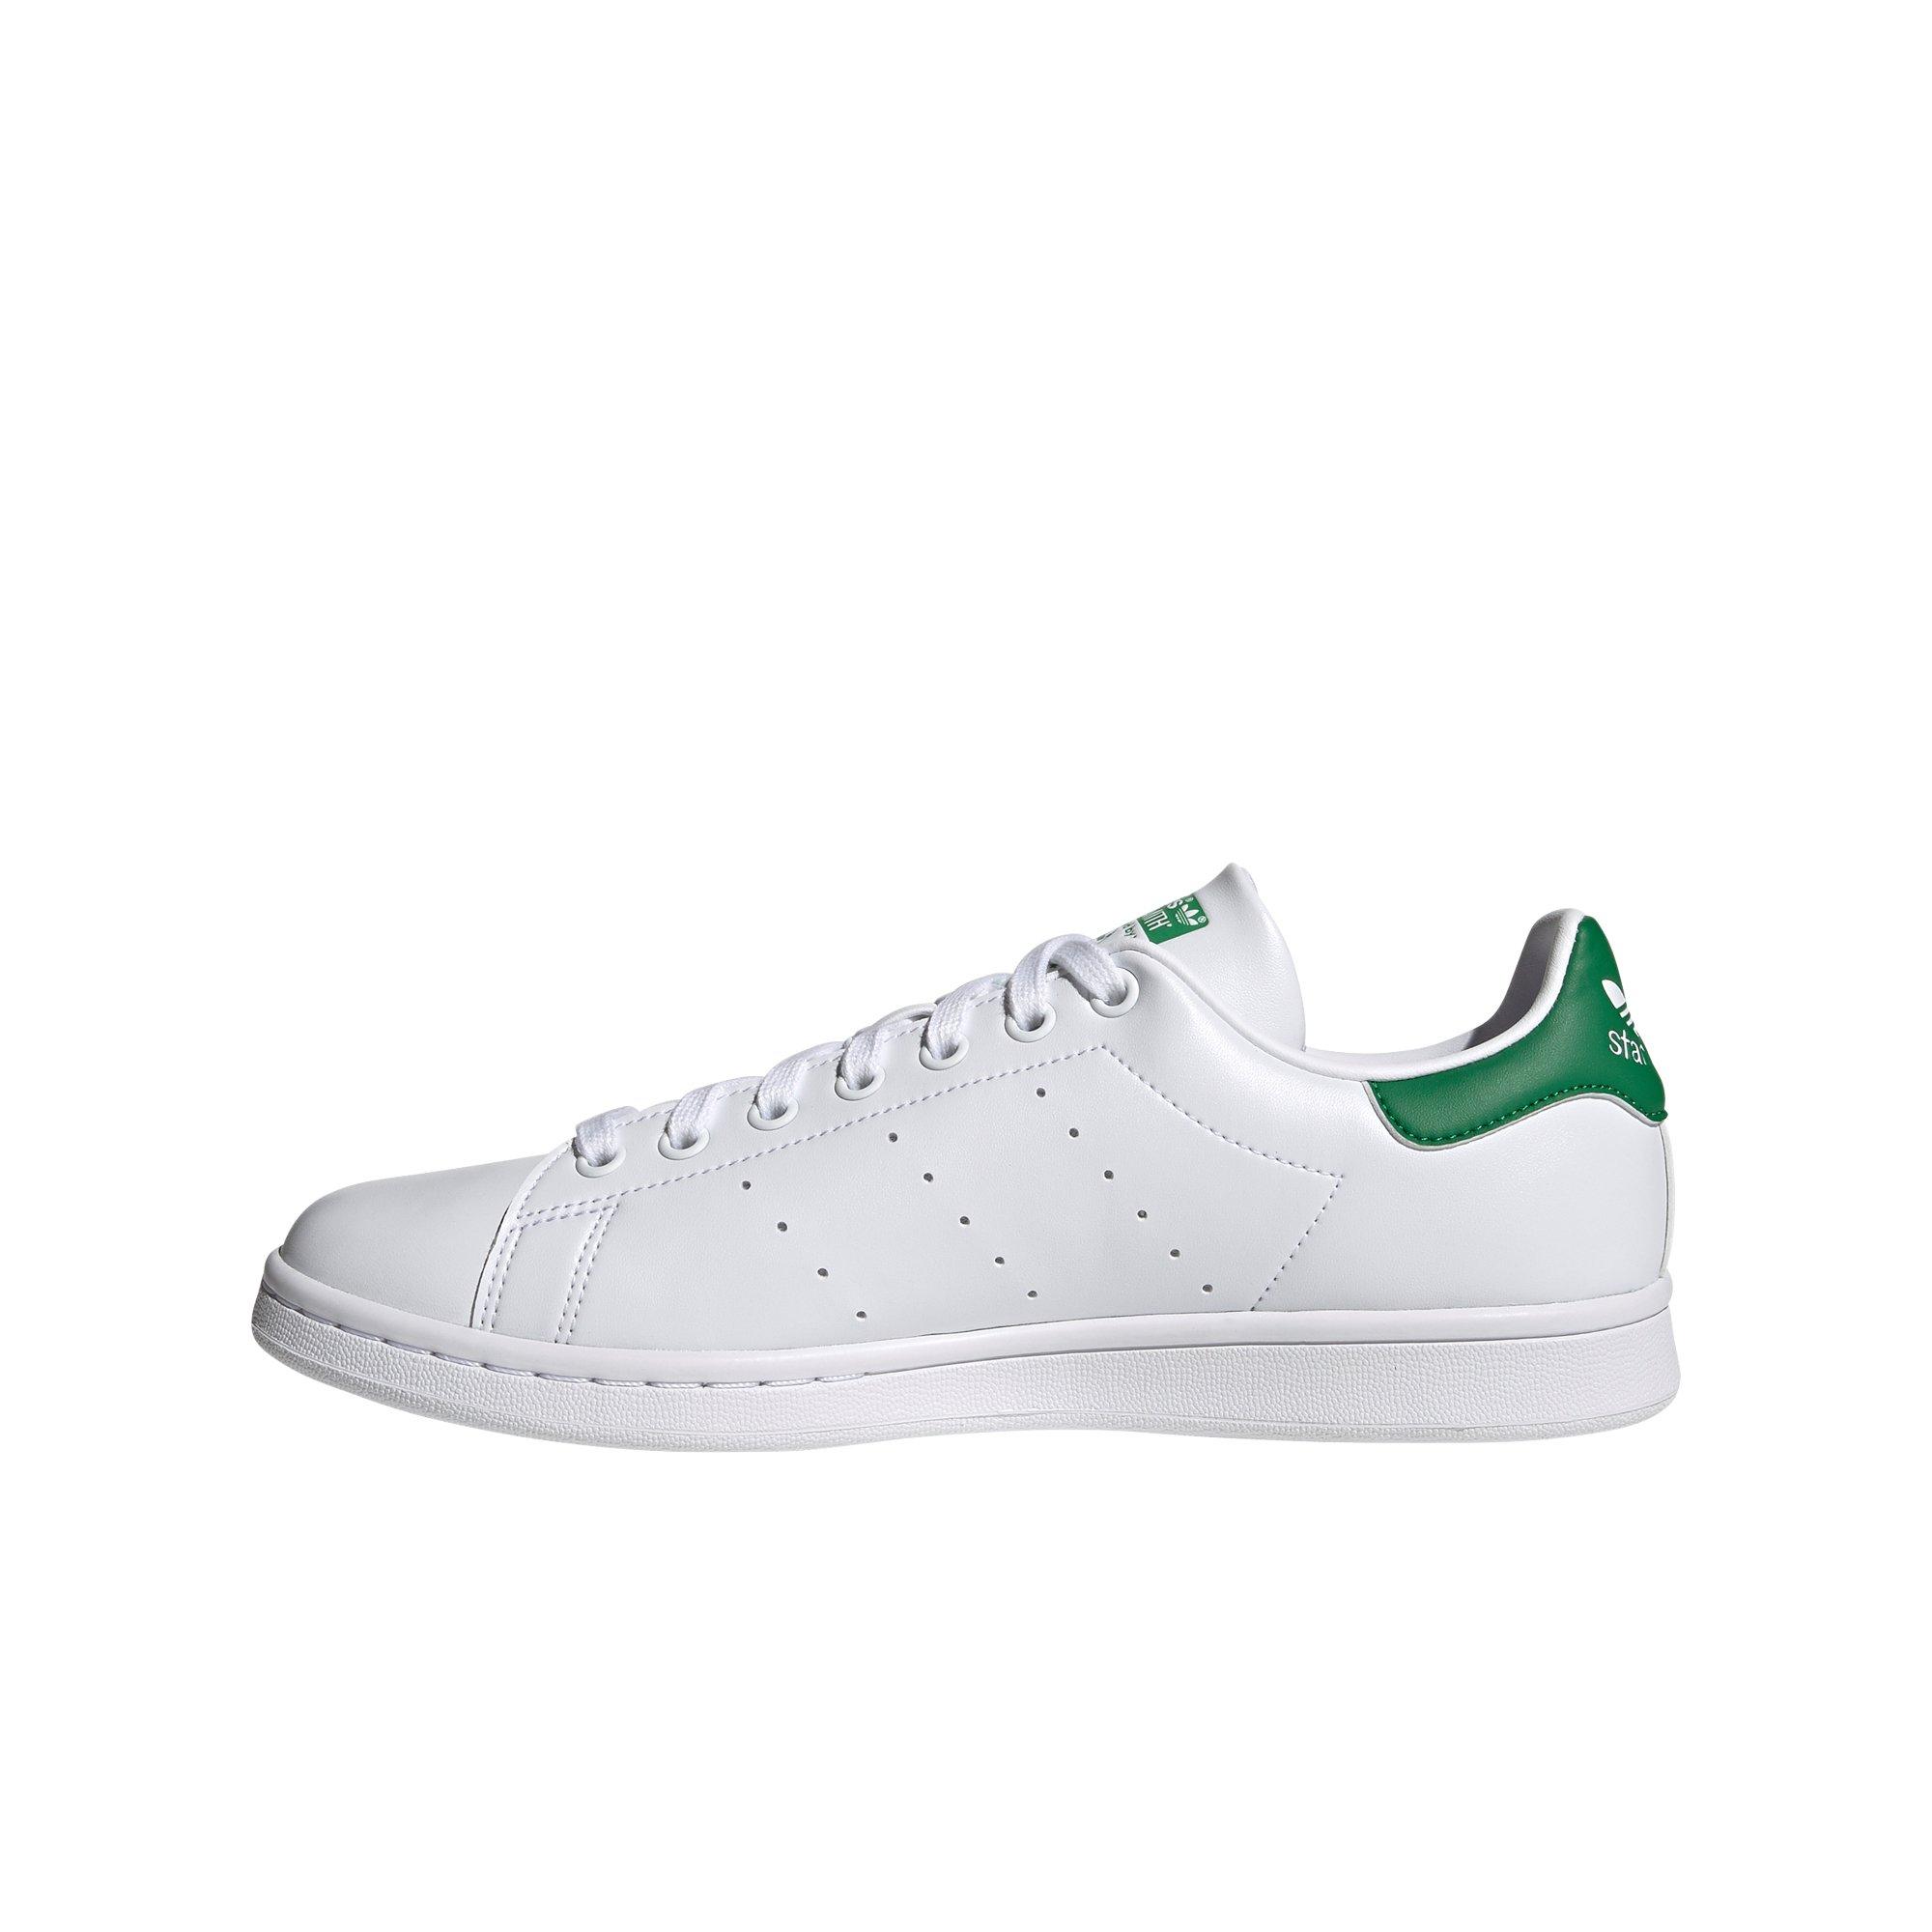 vuist Savant leerling adidas Originals Stan Smith "White/Green" Men's Shoe